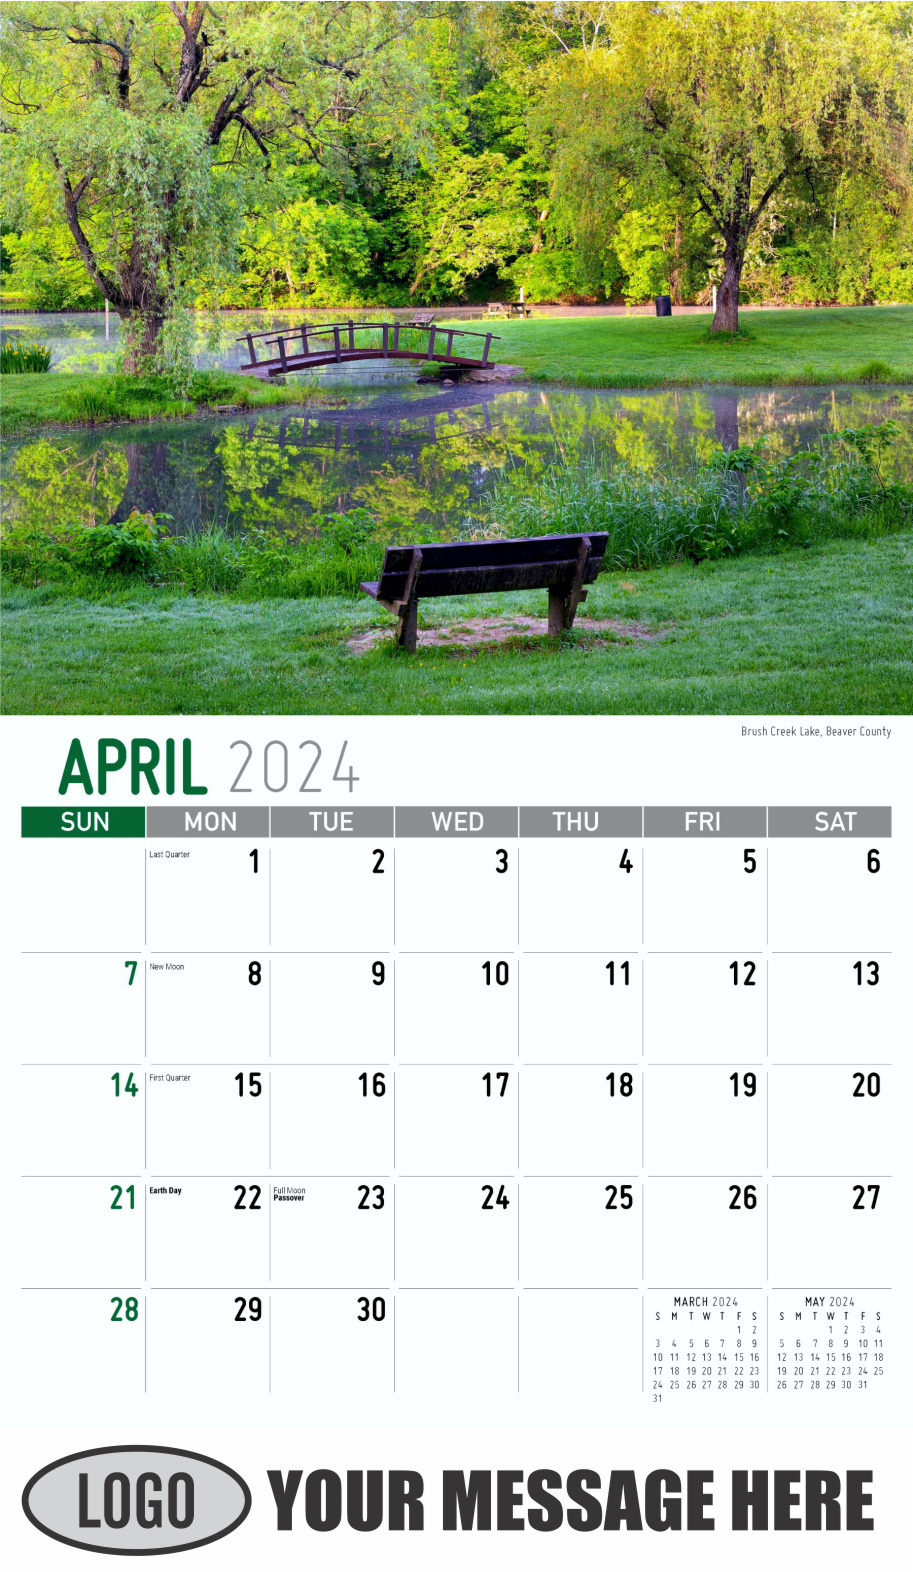 Scenes of Pennsylvania 2024 Business Promotion Calendar - April